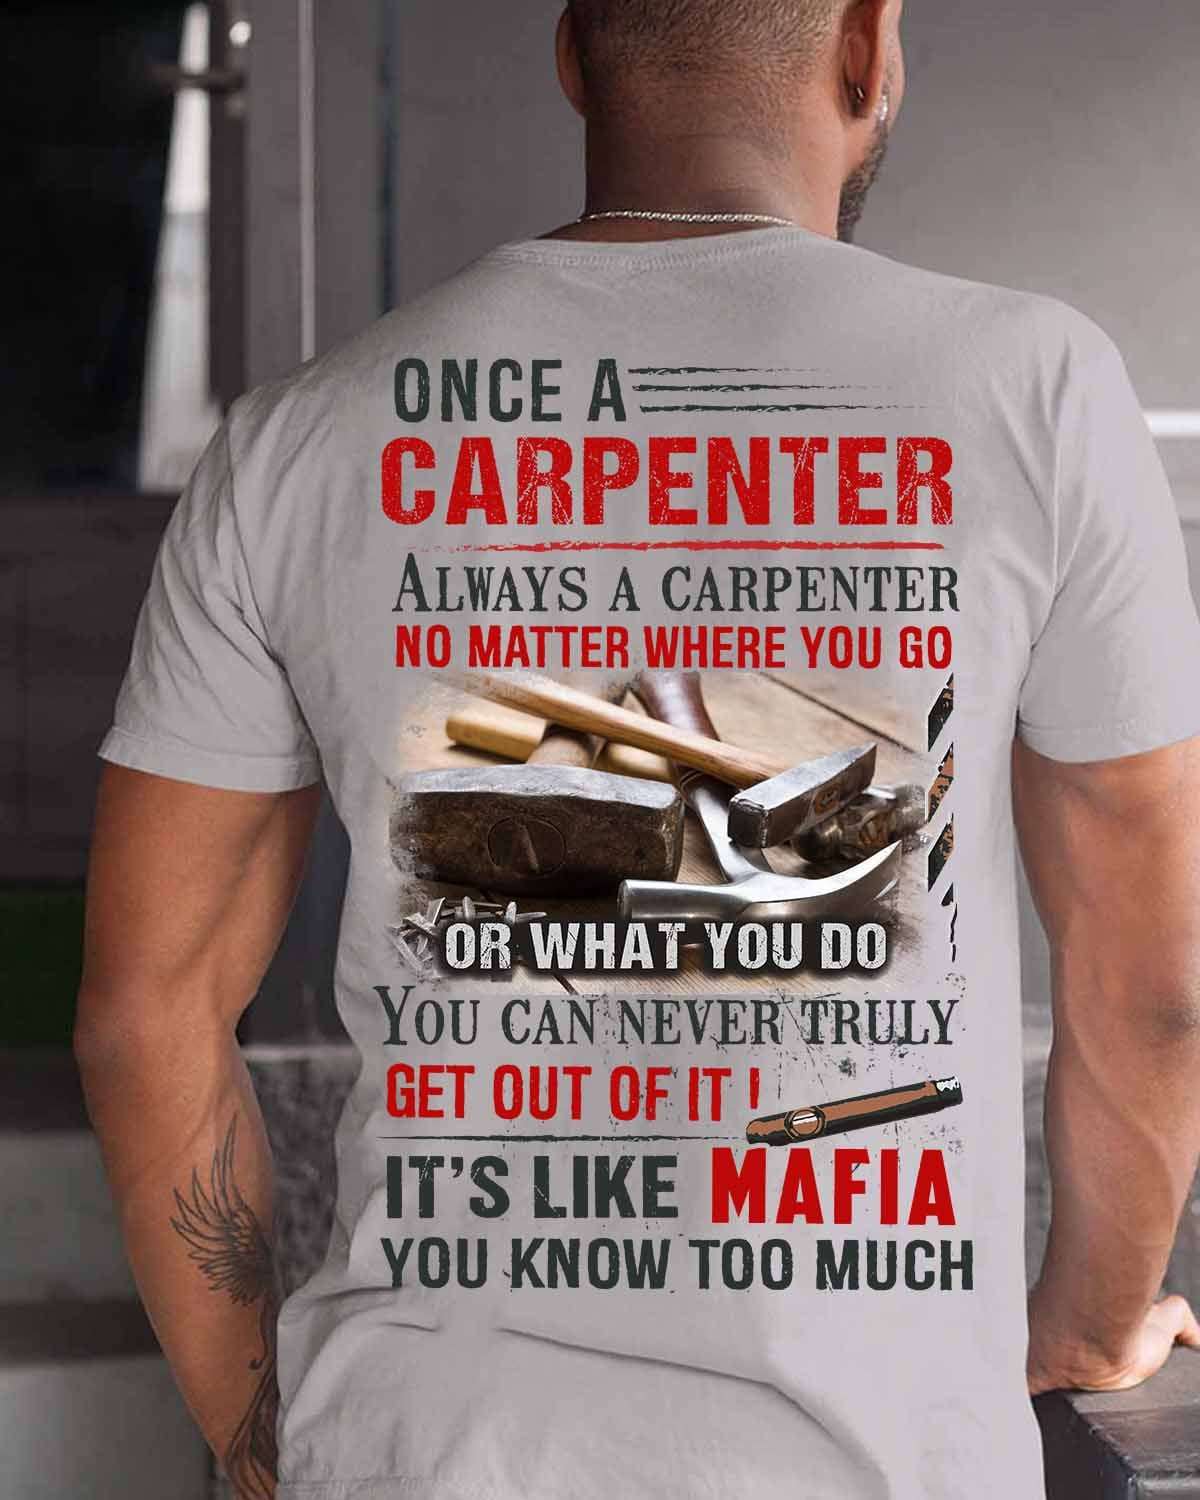 Once a carpenter always a carpenter - Carpenter like Mafia, carpenter the job